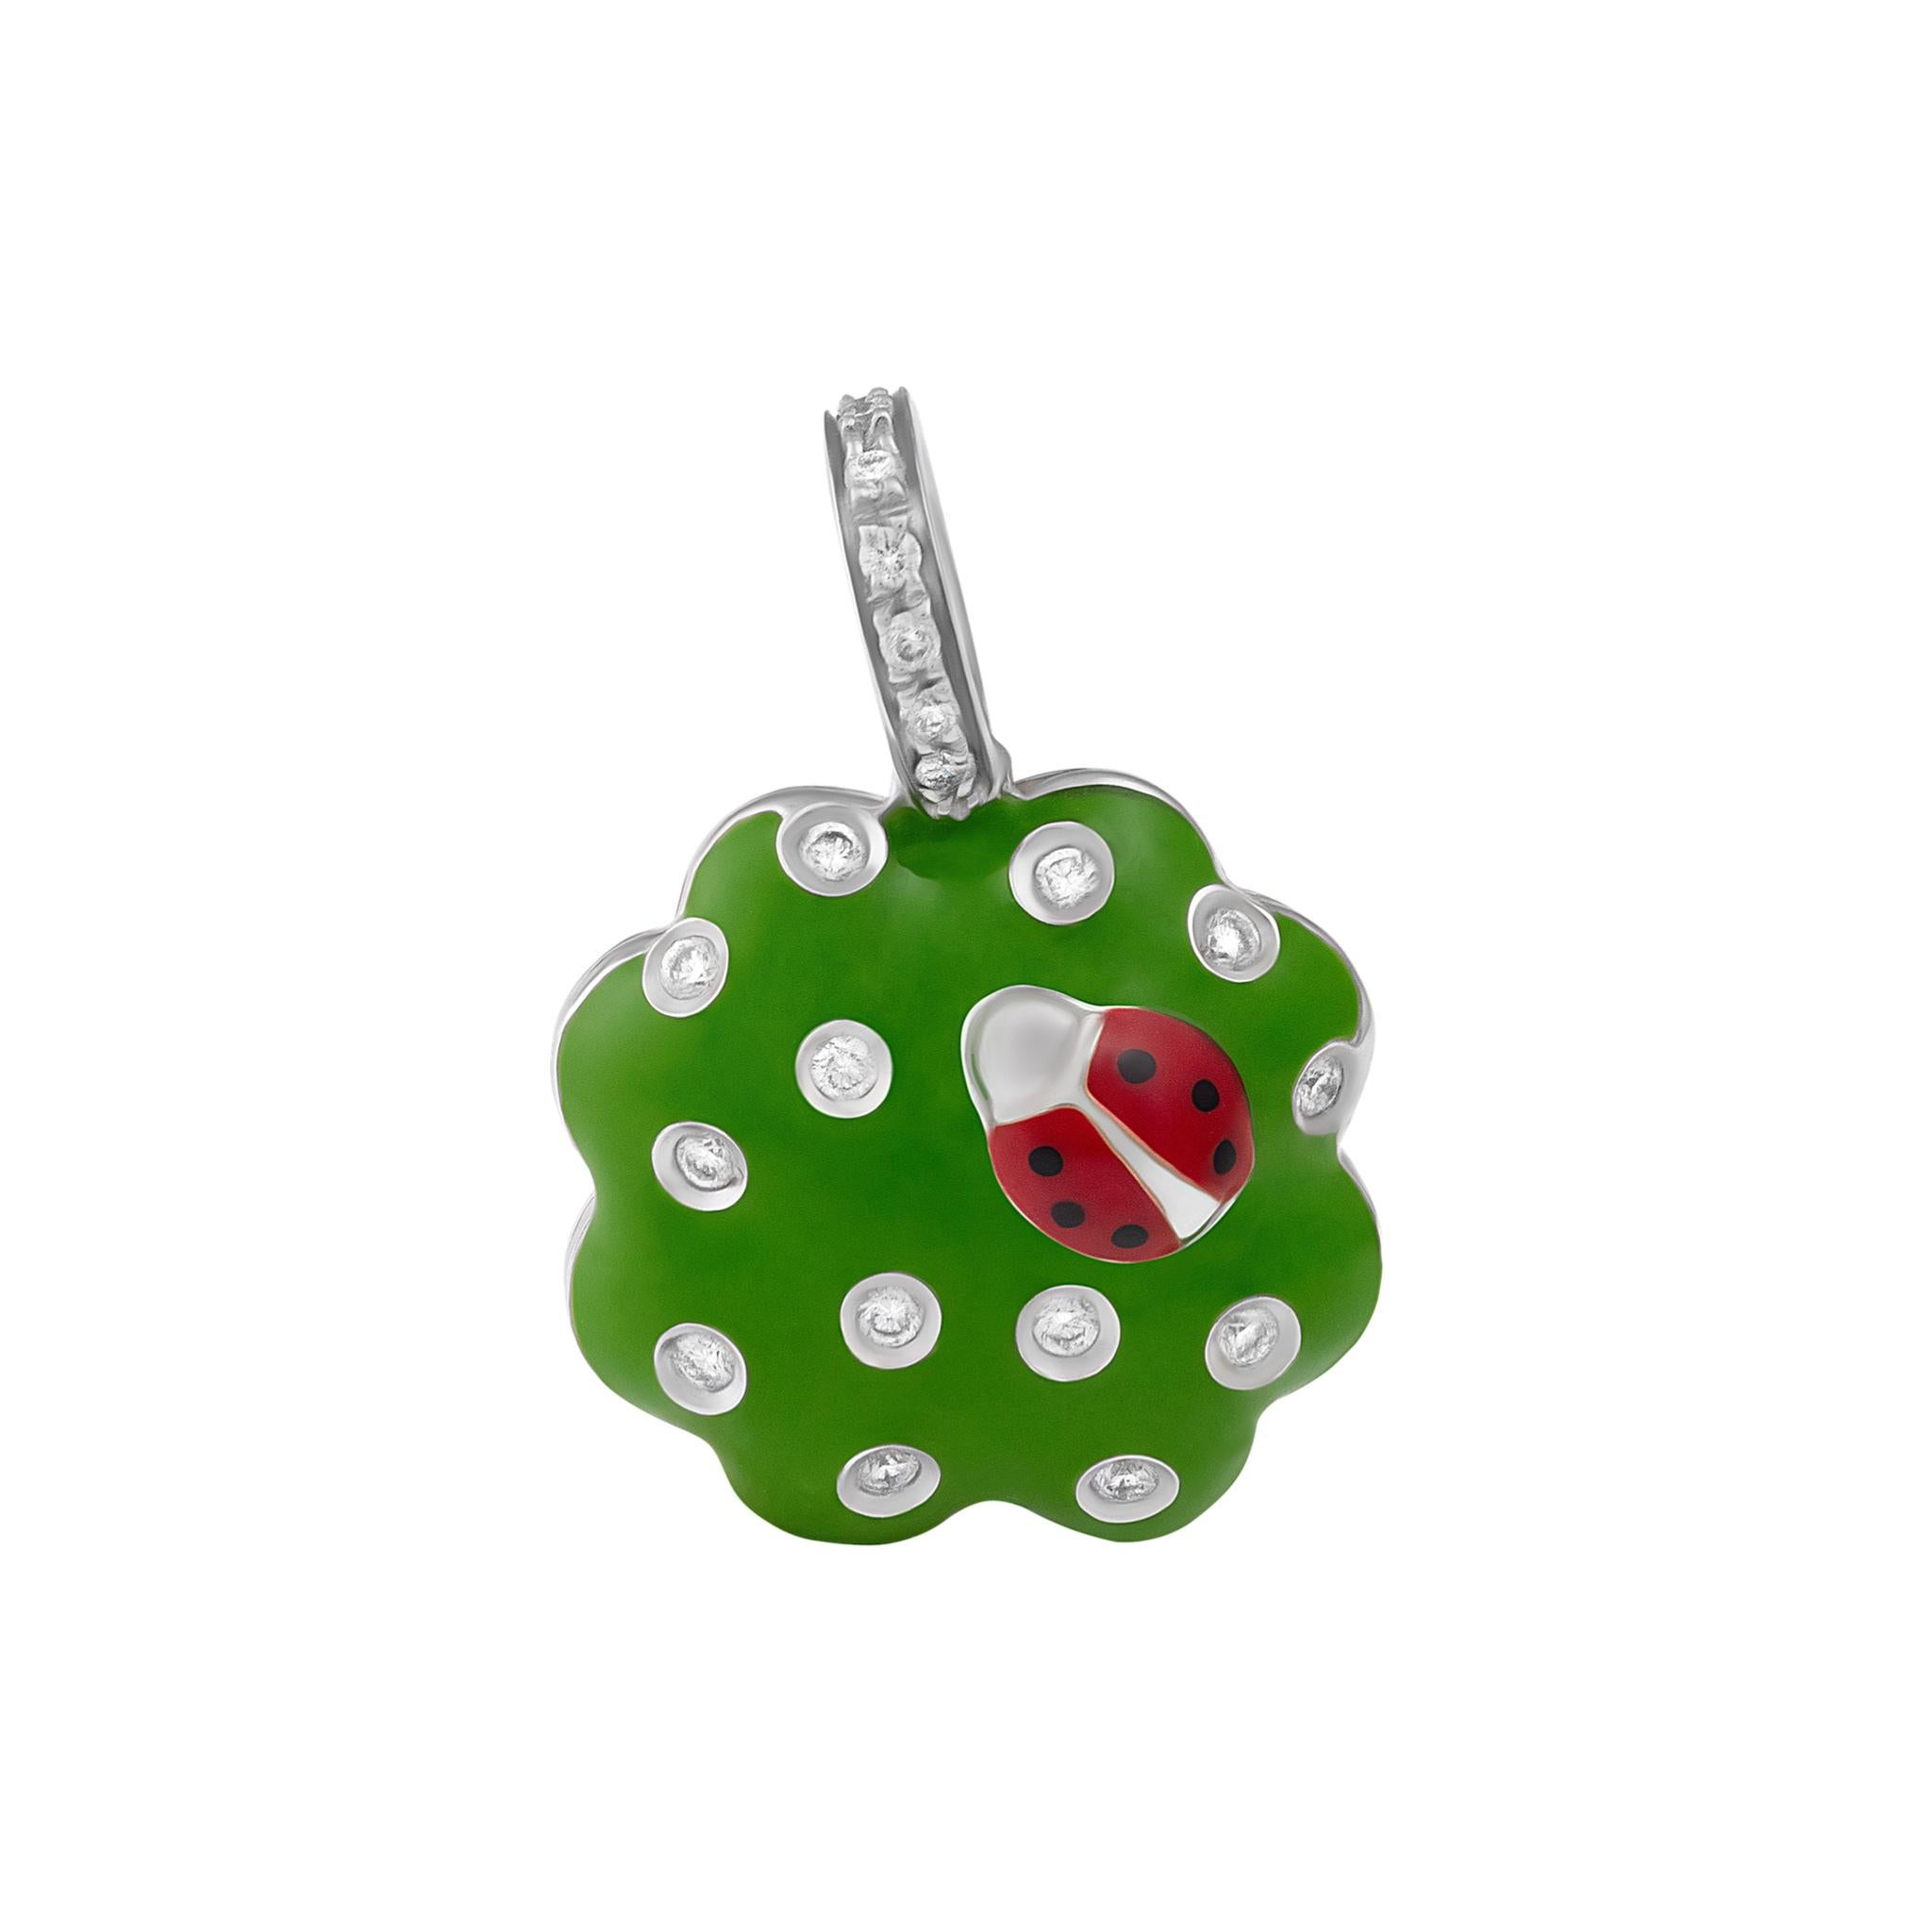 Ladybug Leaf Charm
Diamond: 0.18ctw
Reference number: ABS01012